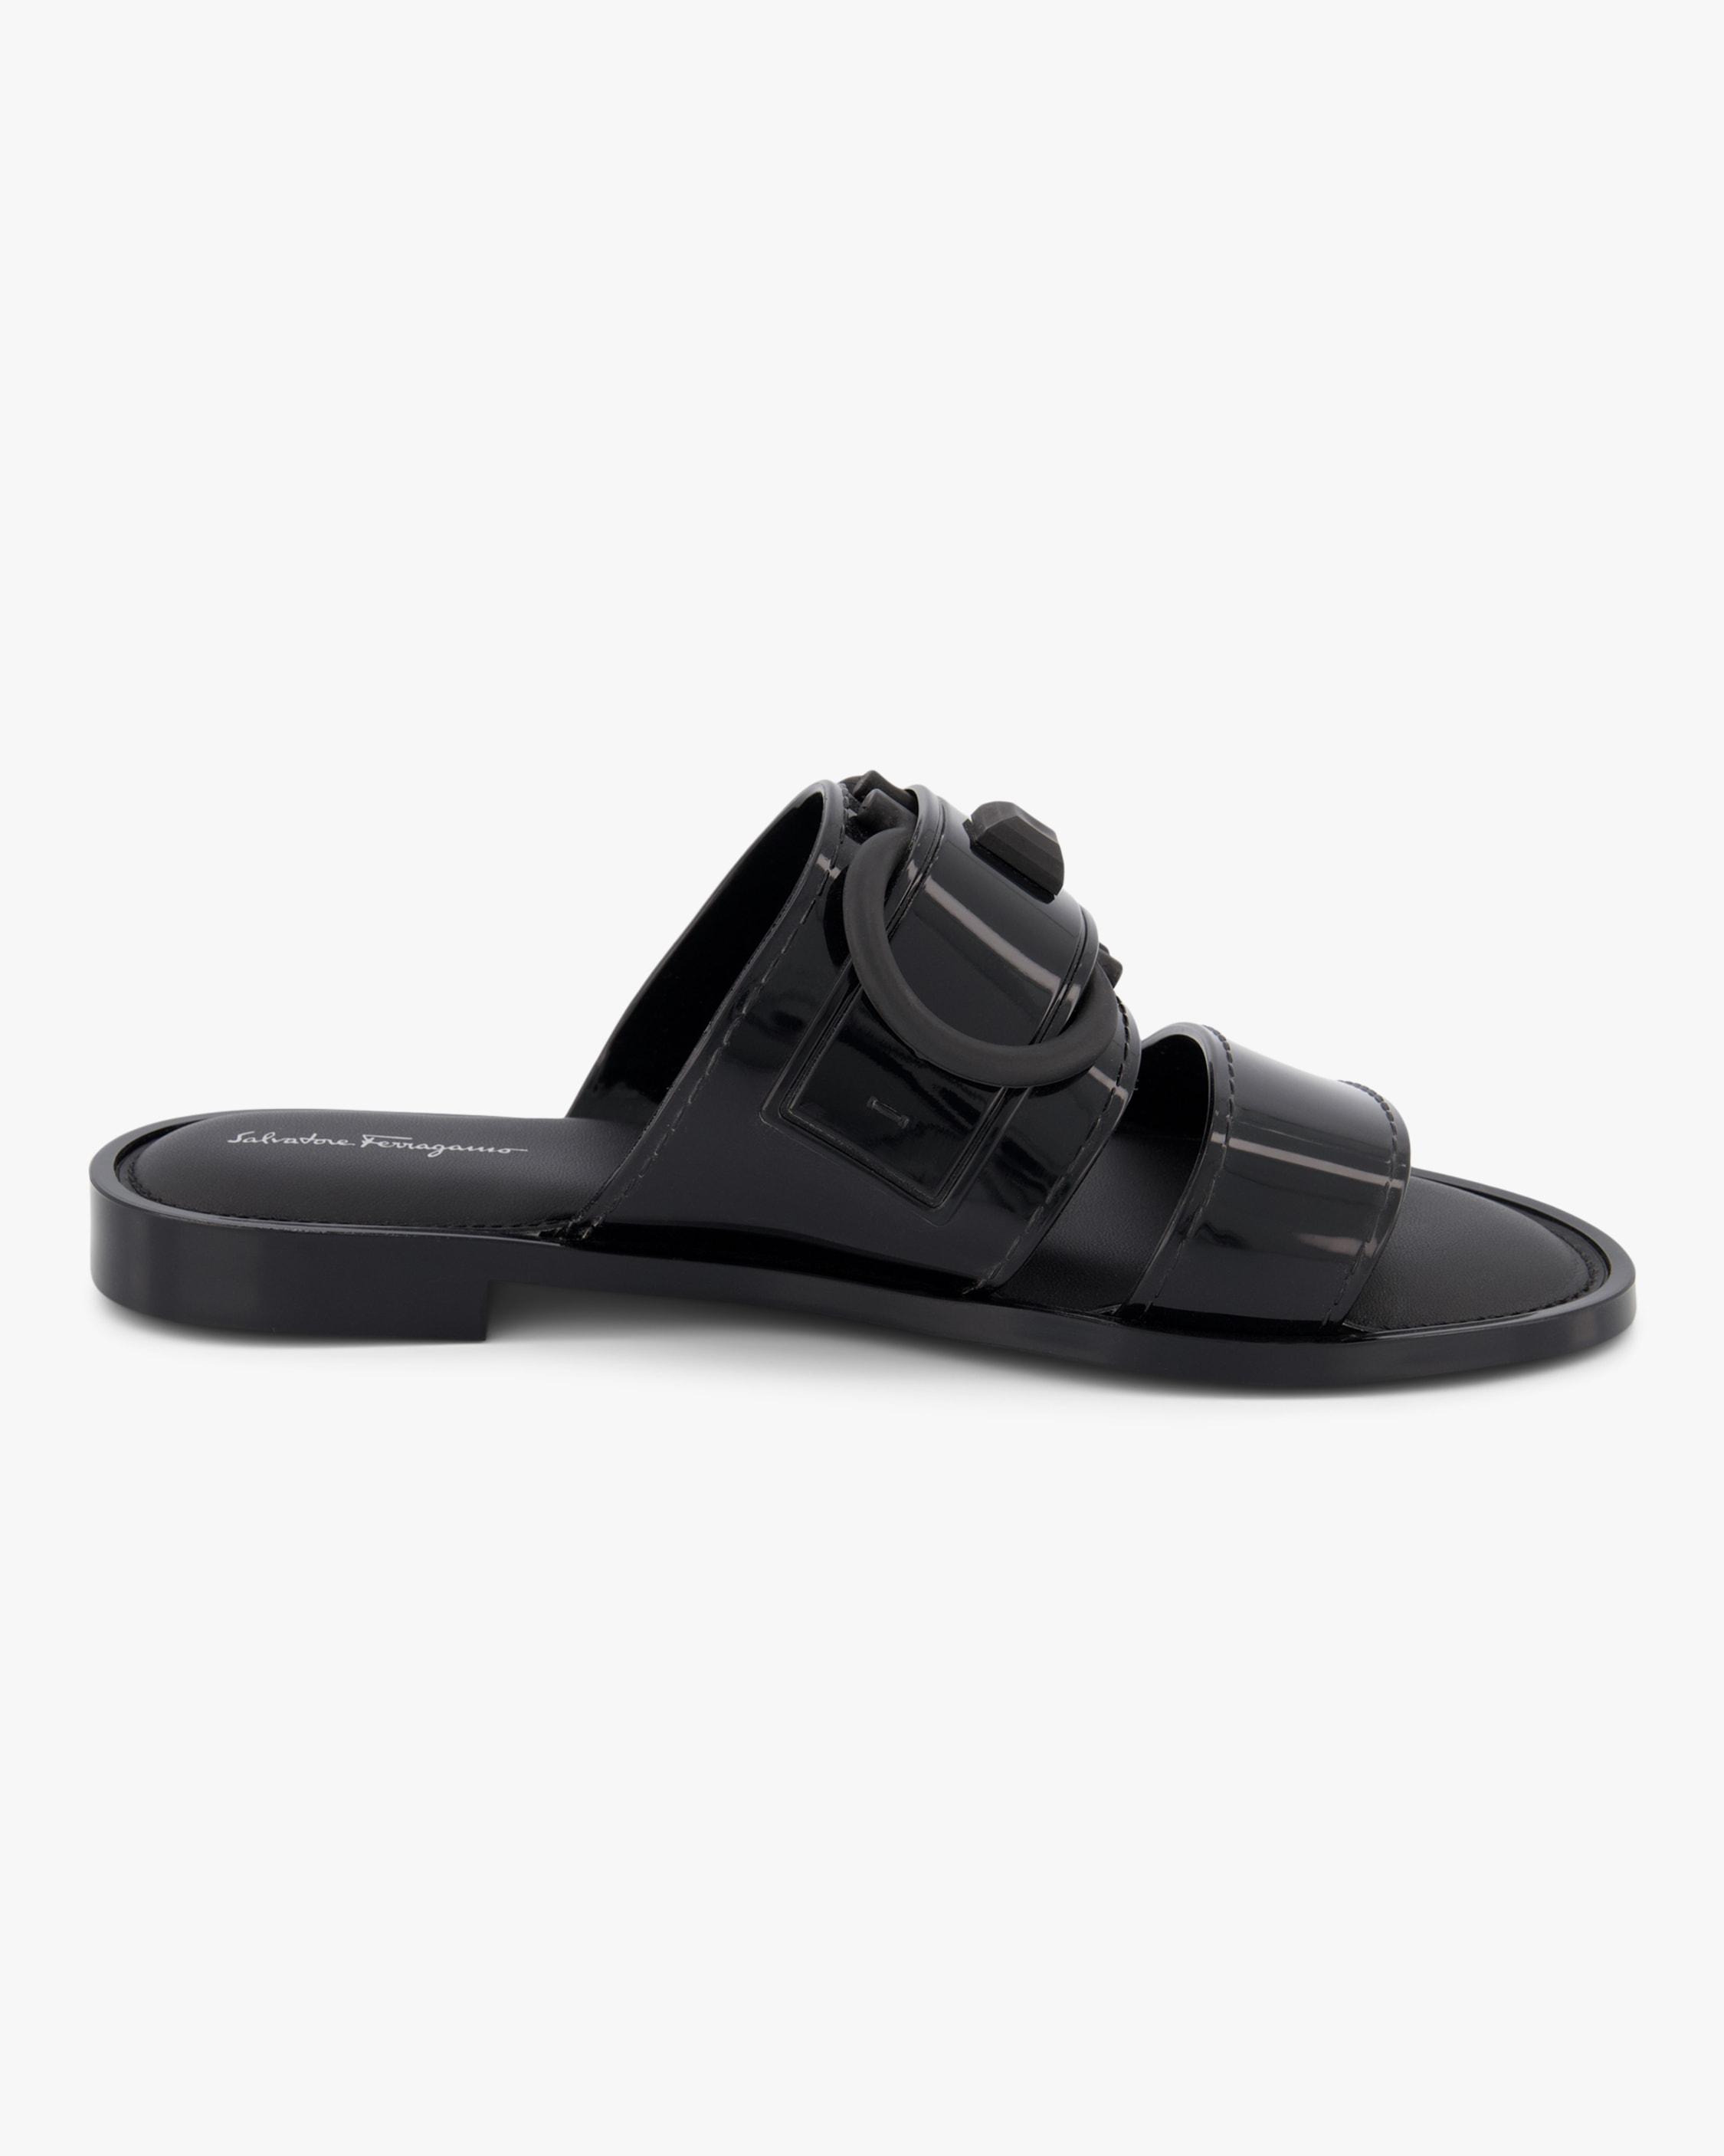 Ferragamo Synthetic Taryn Slide Sandals in Nero (Black) - Save 54 